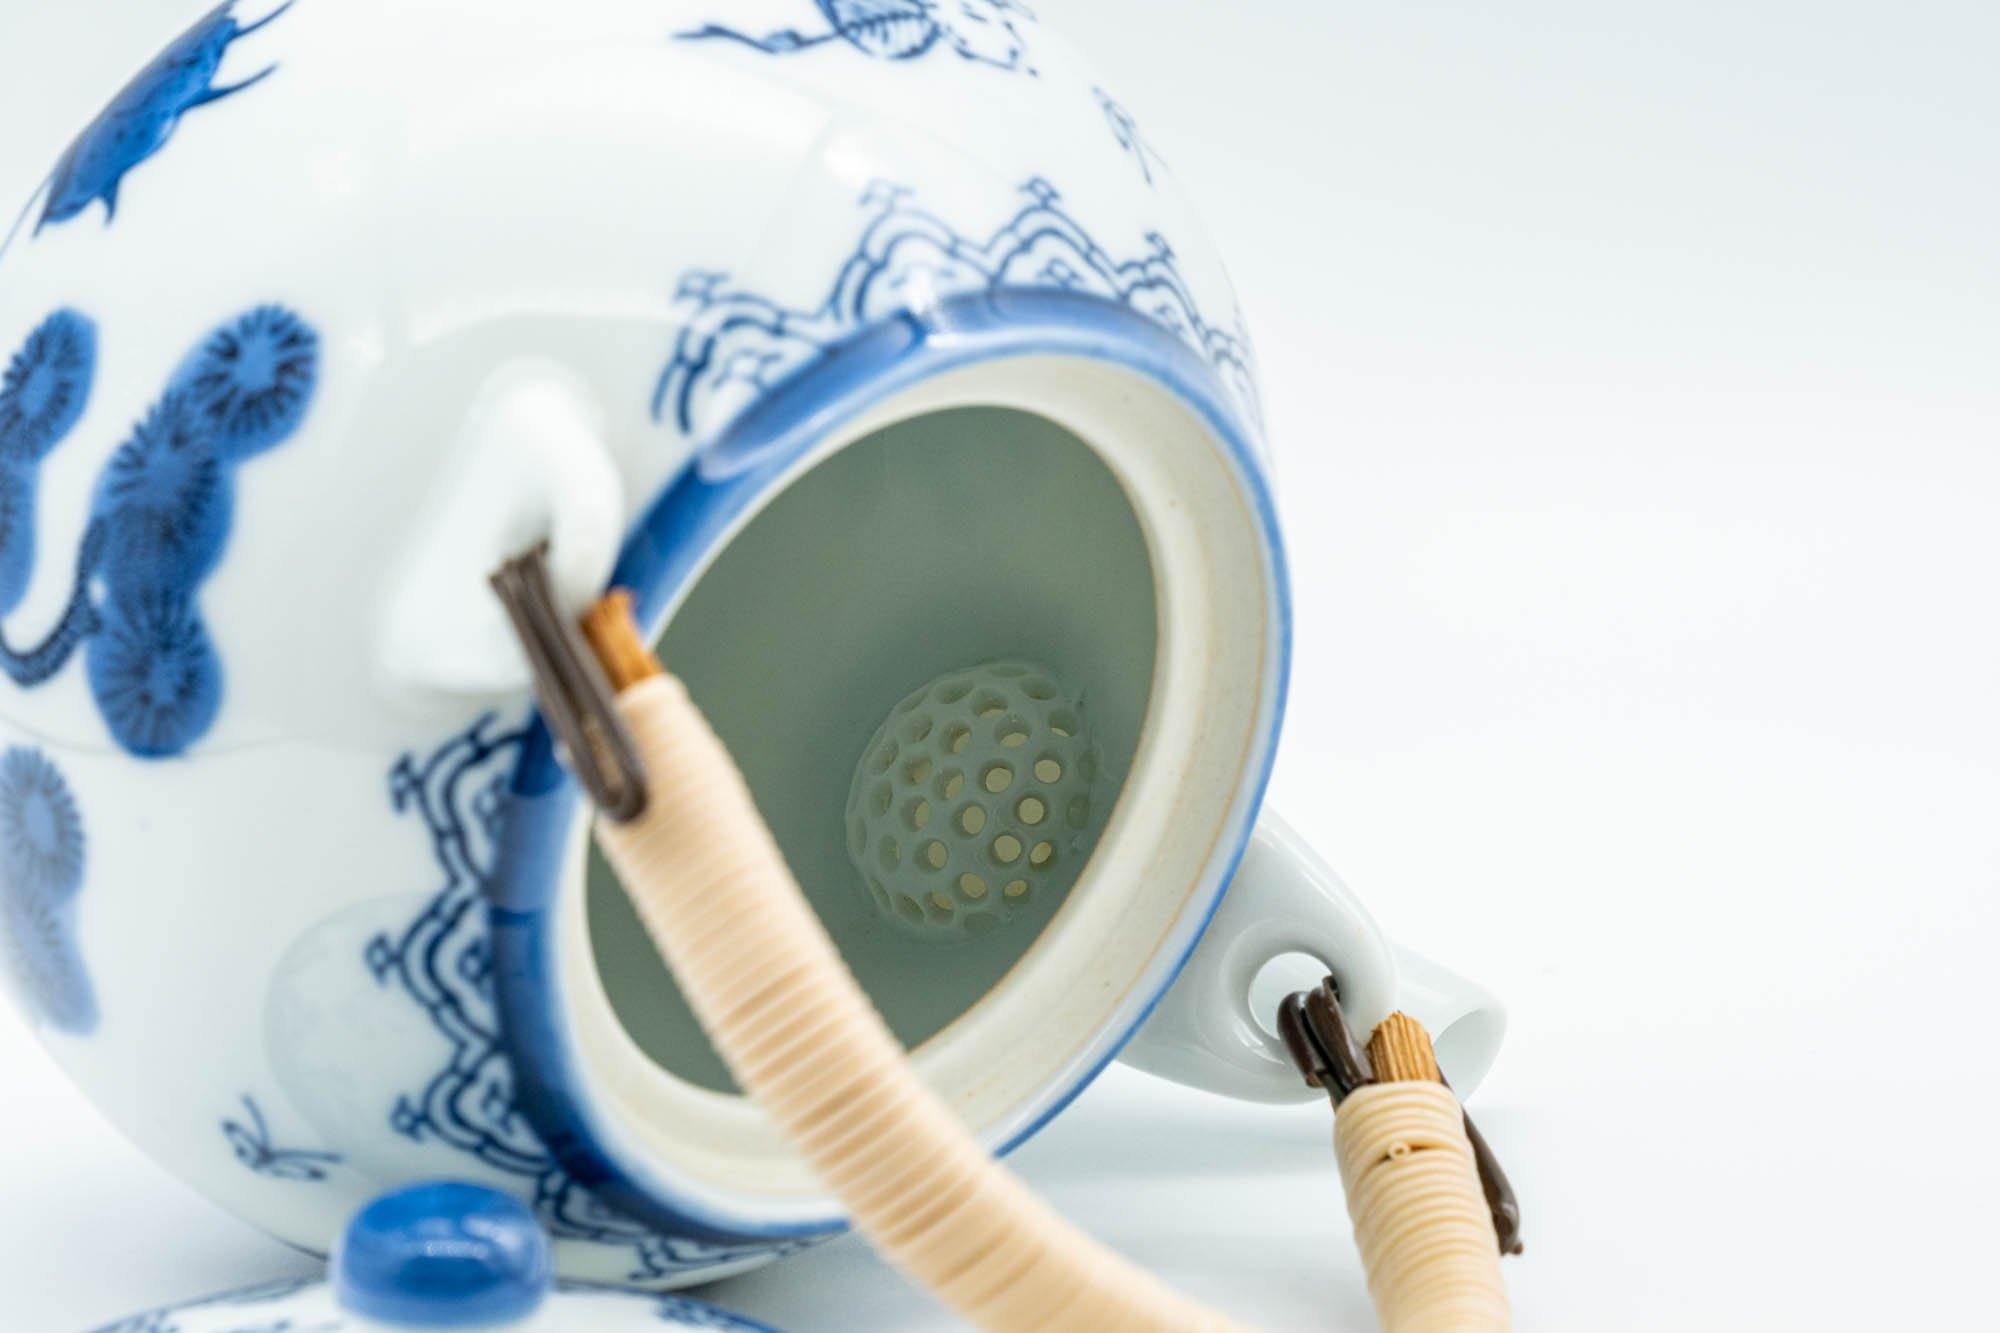 Japanese Dobin - White Porcelain Arita-yaki Debeso Teapot - 250ml - Tezumi